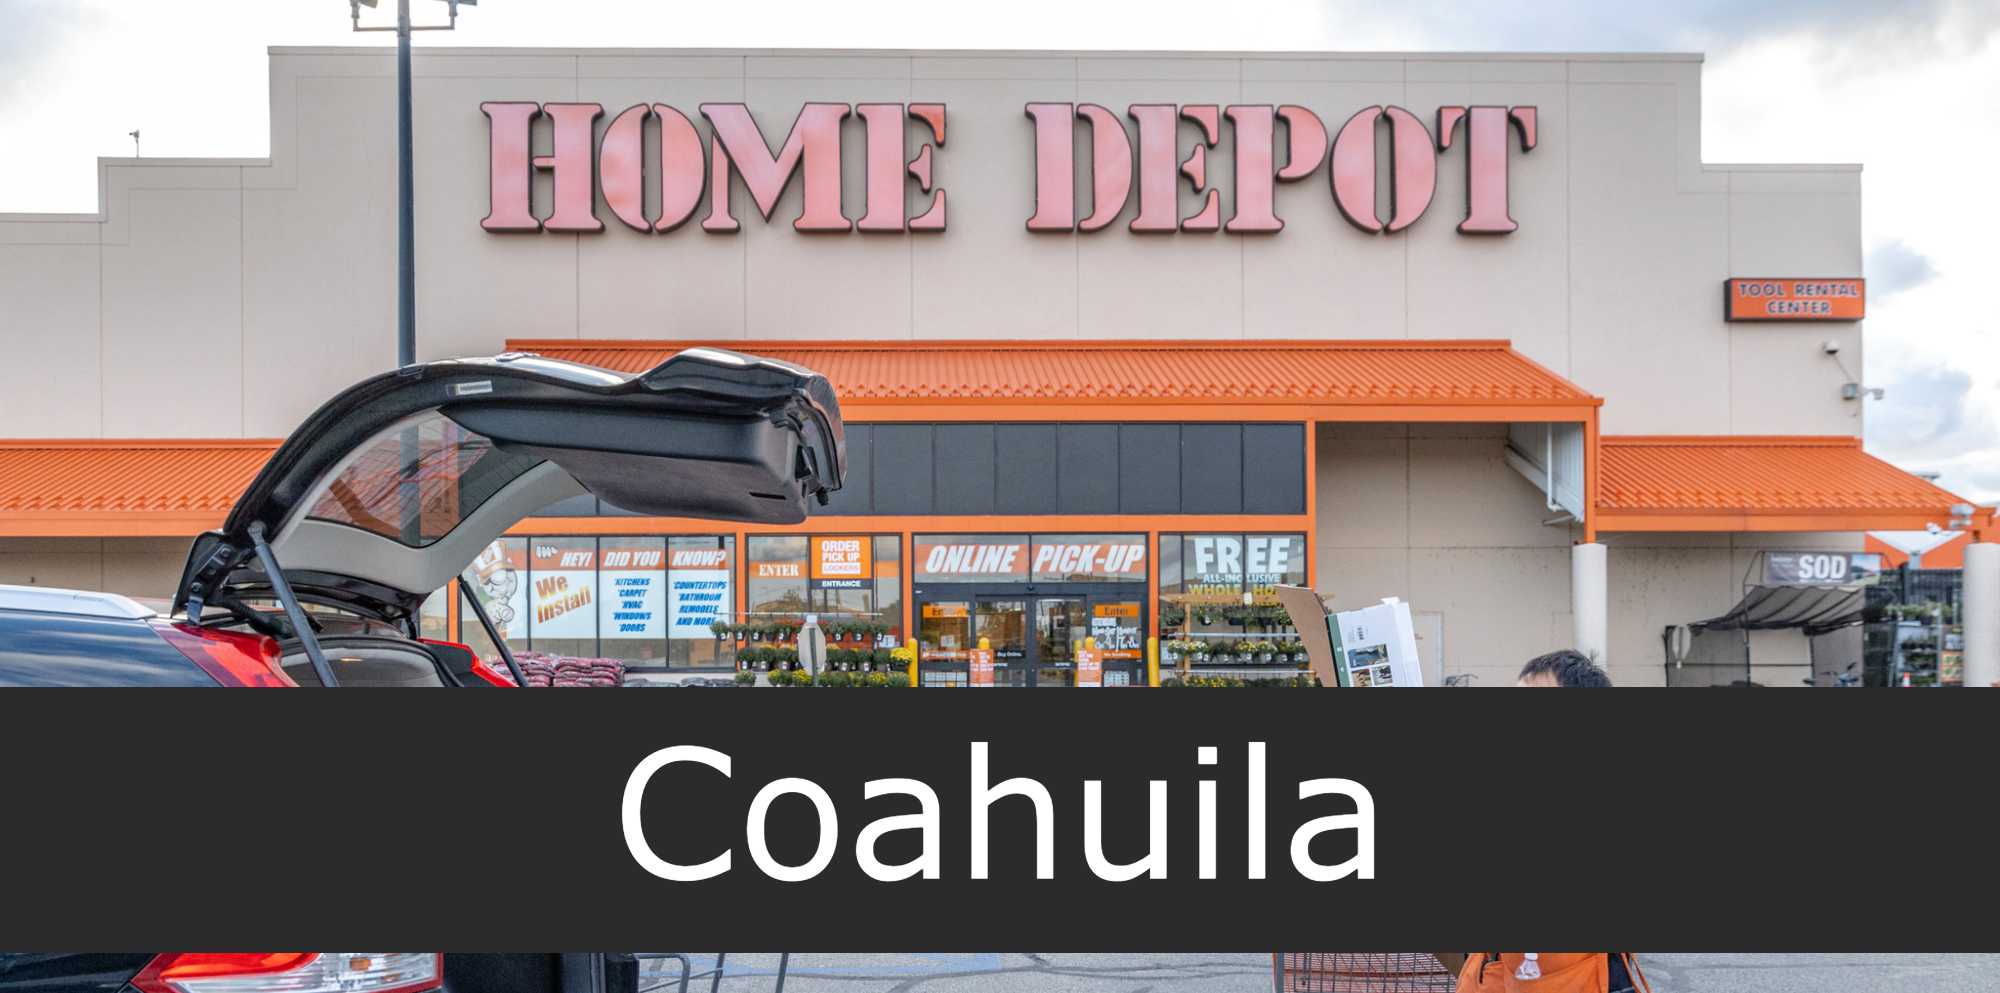 home depot Coahuila